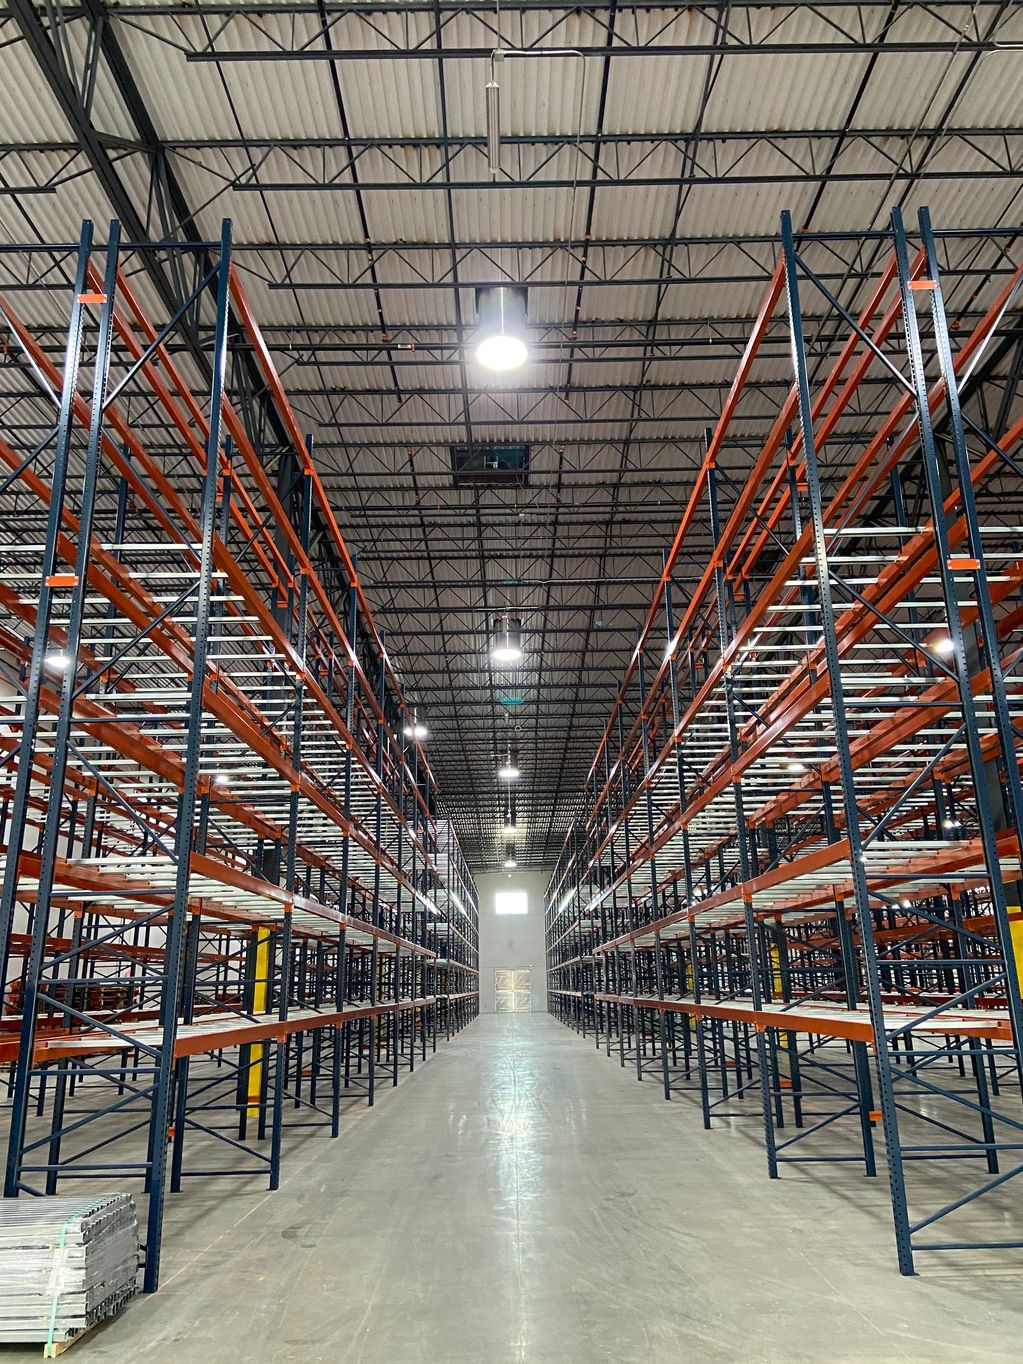 Solatube tubular daylighting devices in warehouse aisle